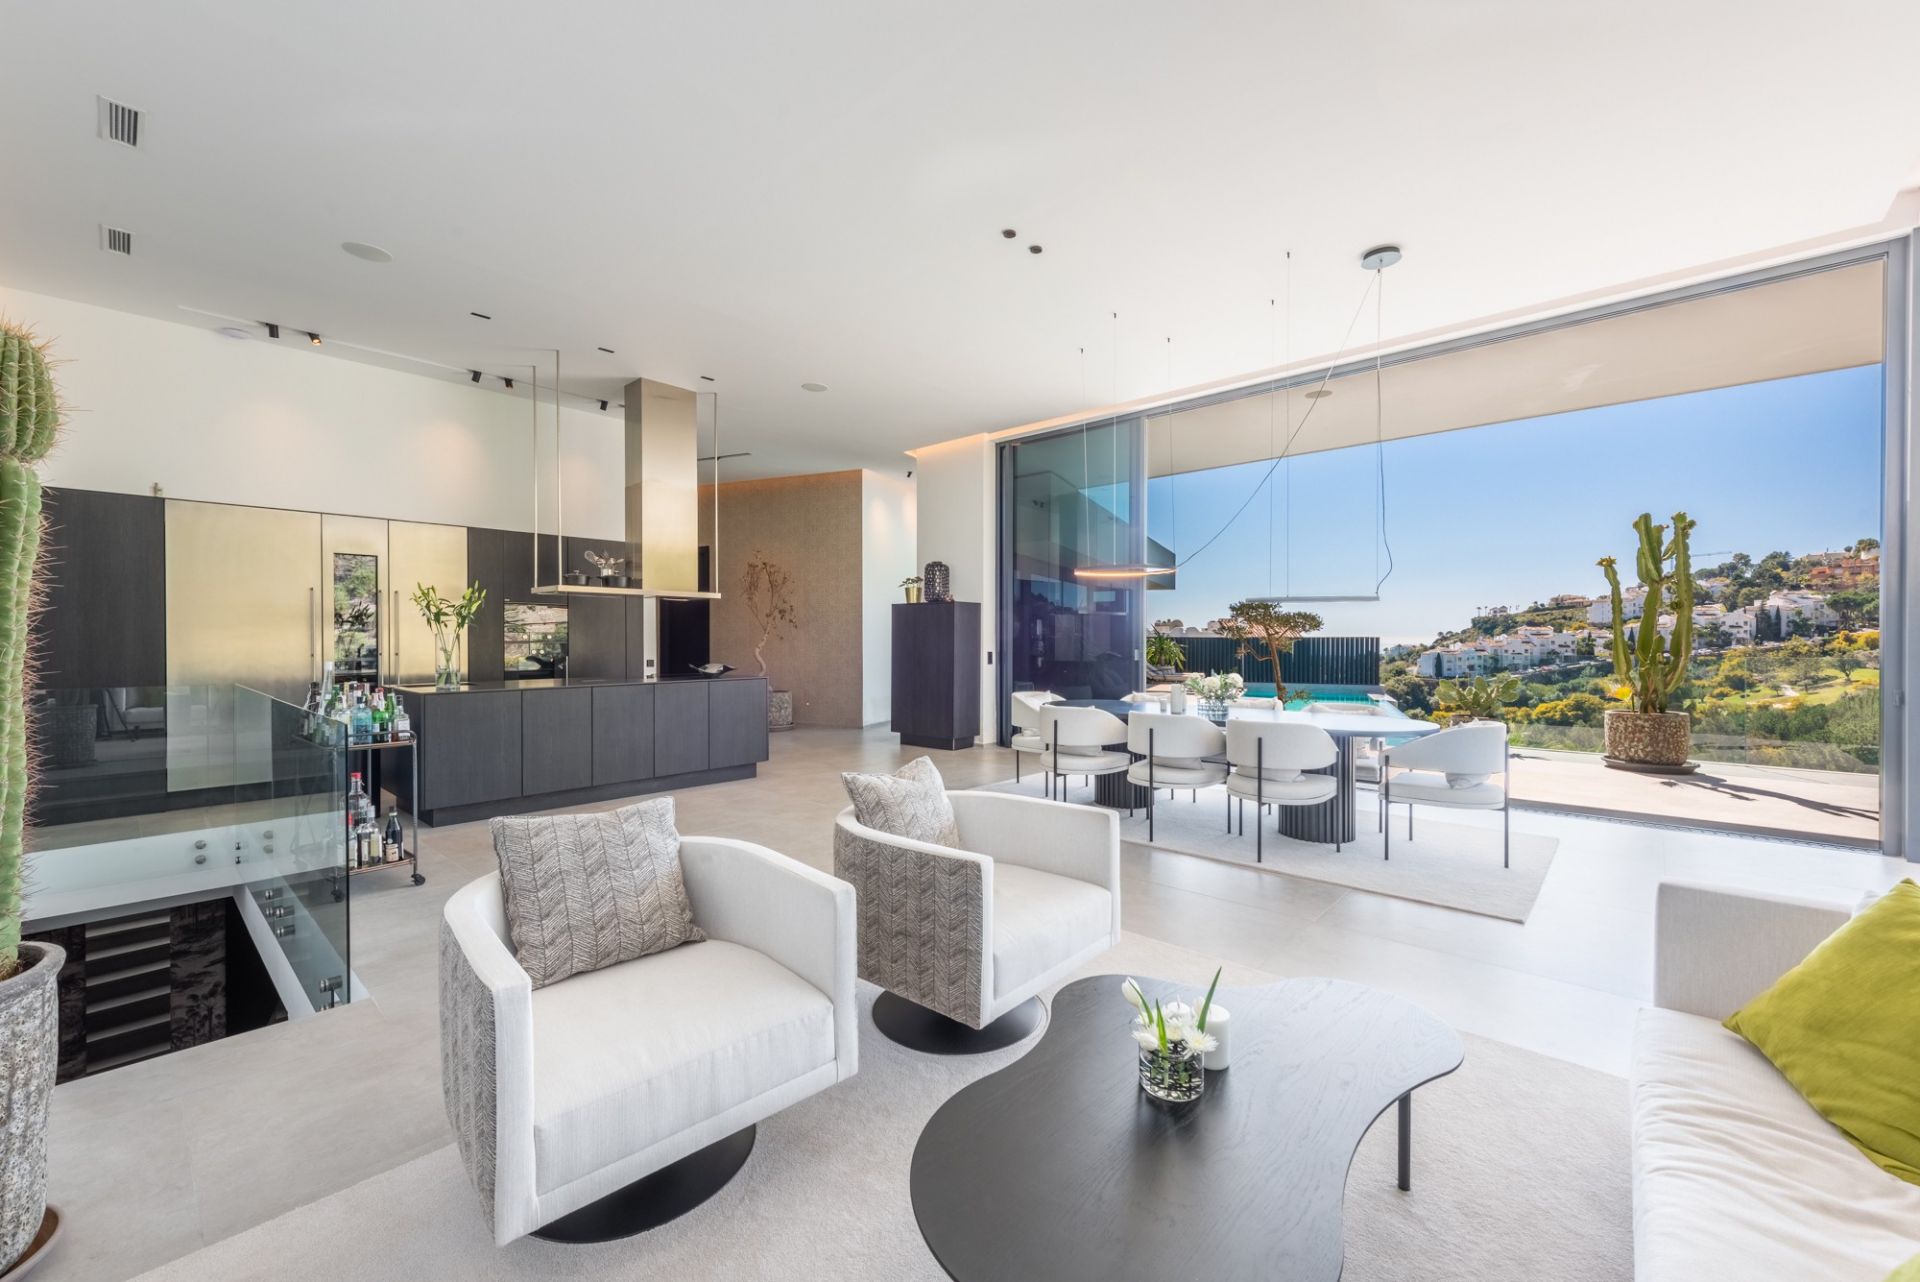 Stunning modern villa with magnificent panoramic views | Engel & Völkers Marbella